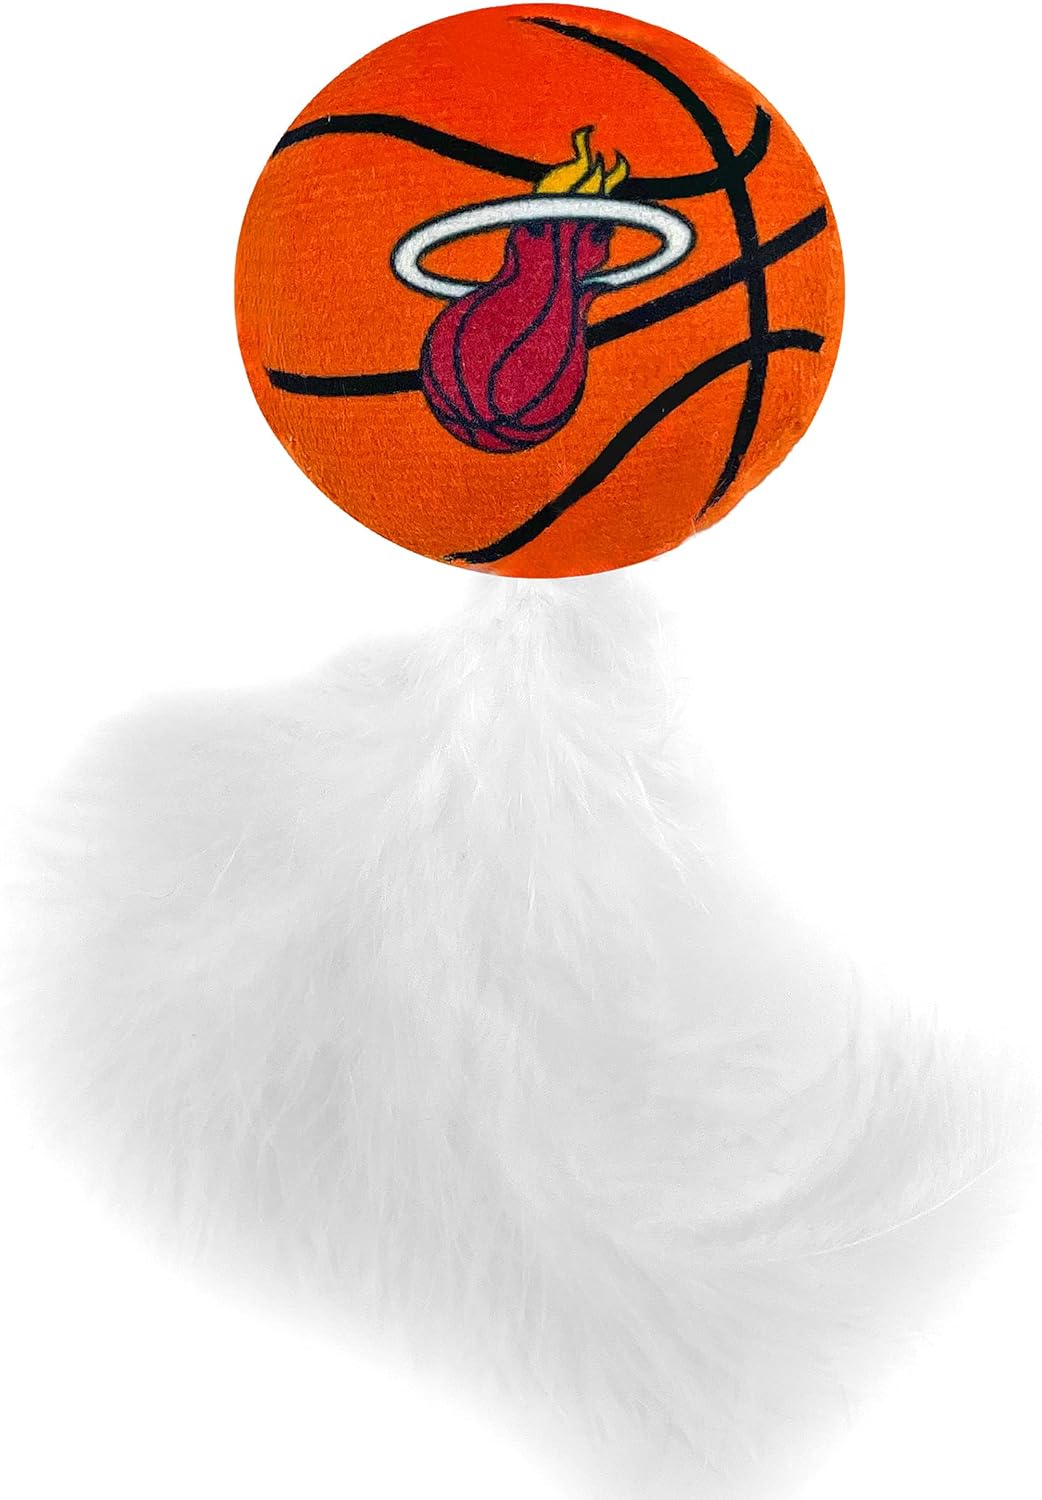 NBA Miami Heat 3 Piece Cat Nip Toys